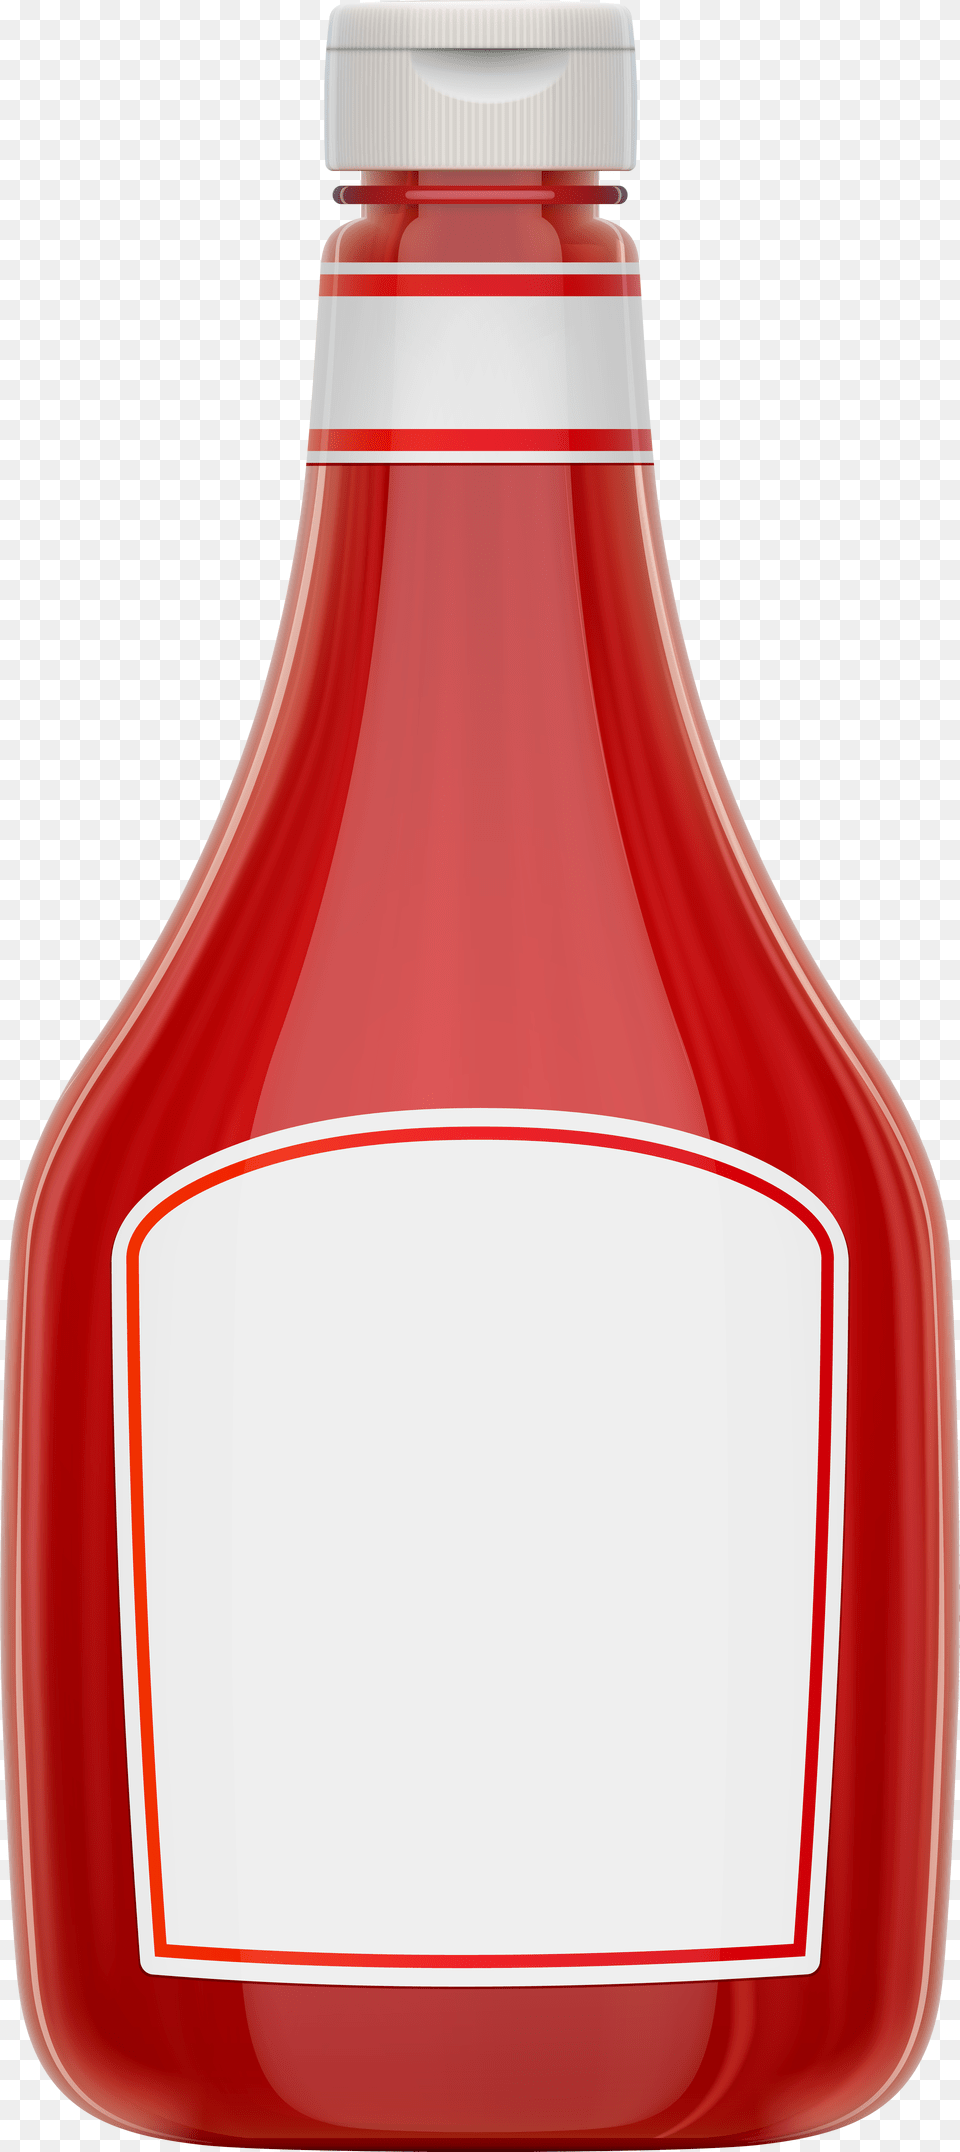 Clipart Ketchup Bottle Banner Library Ketchup Ketchup Bottle Transparent Background Png